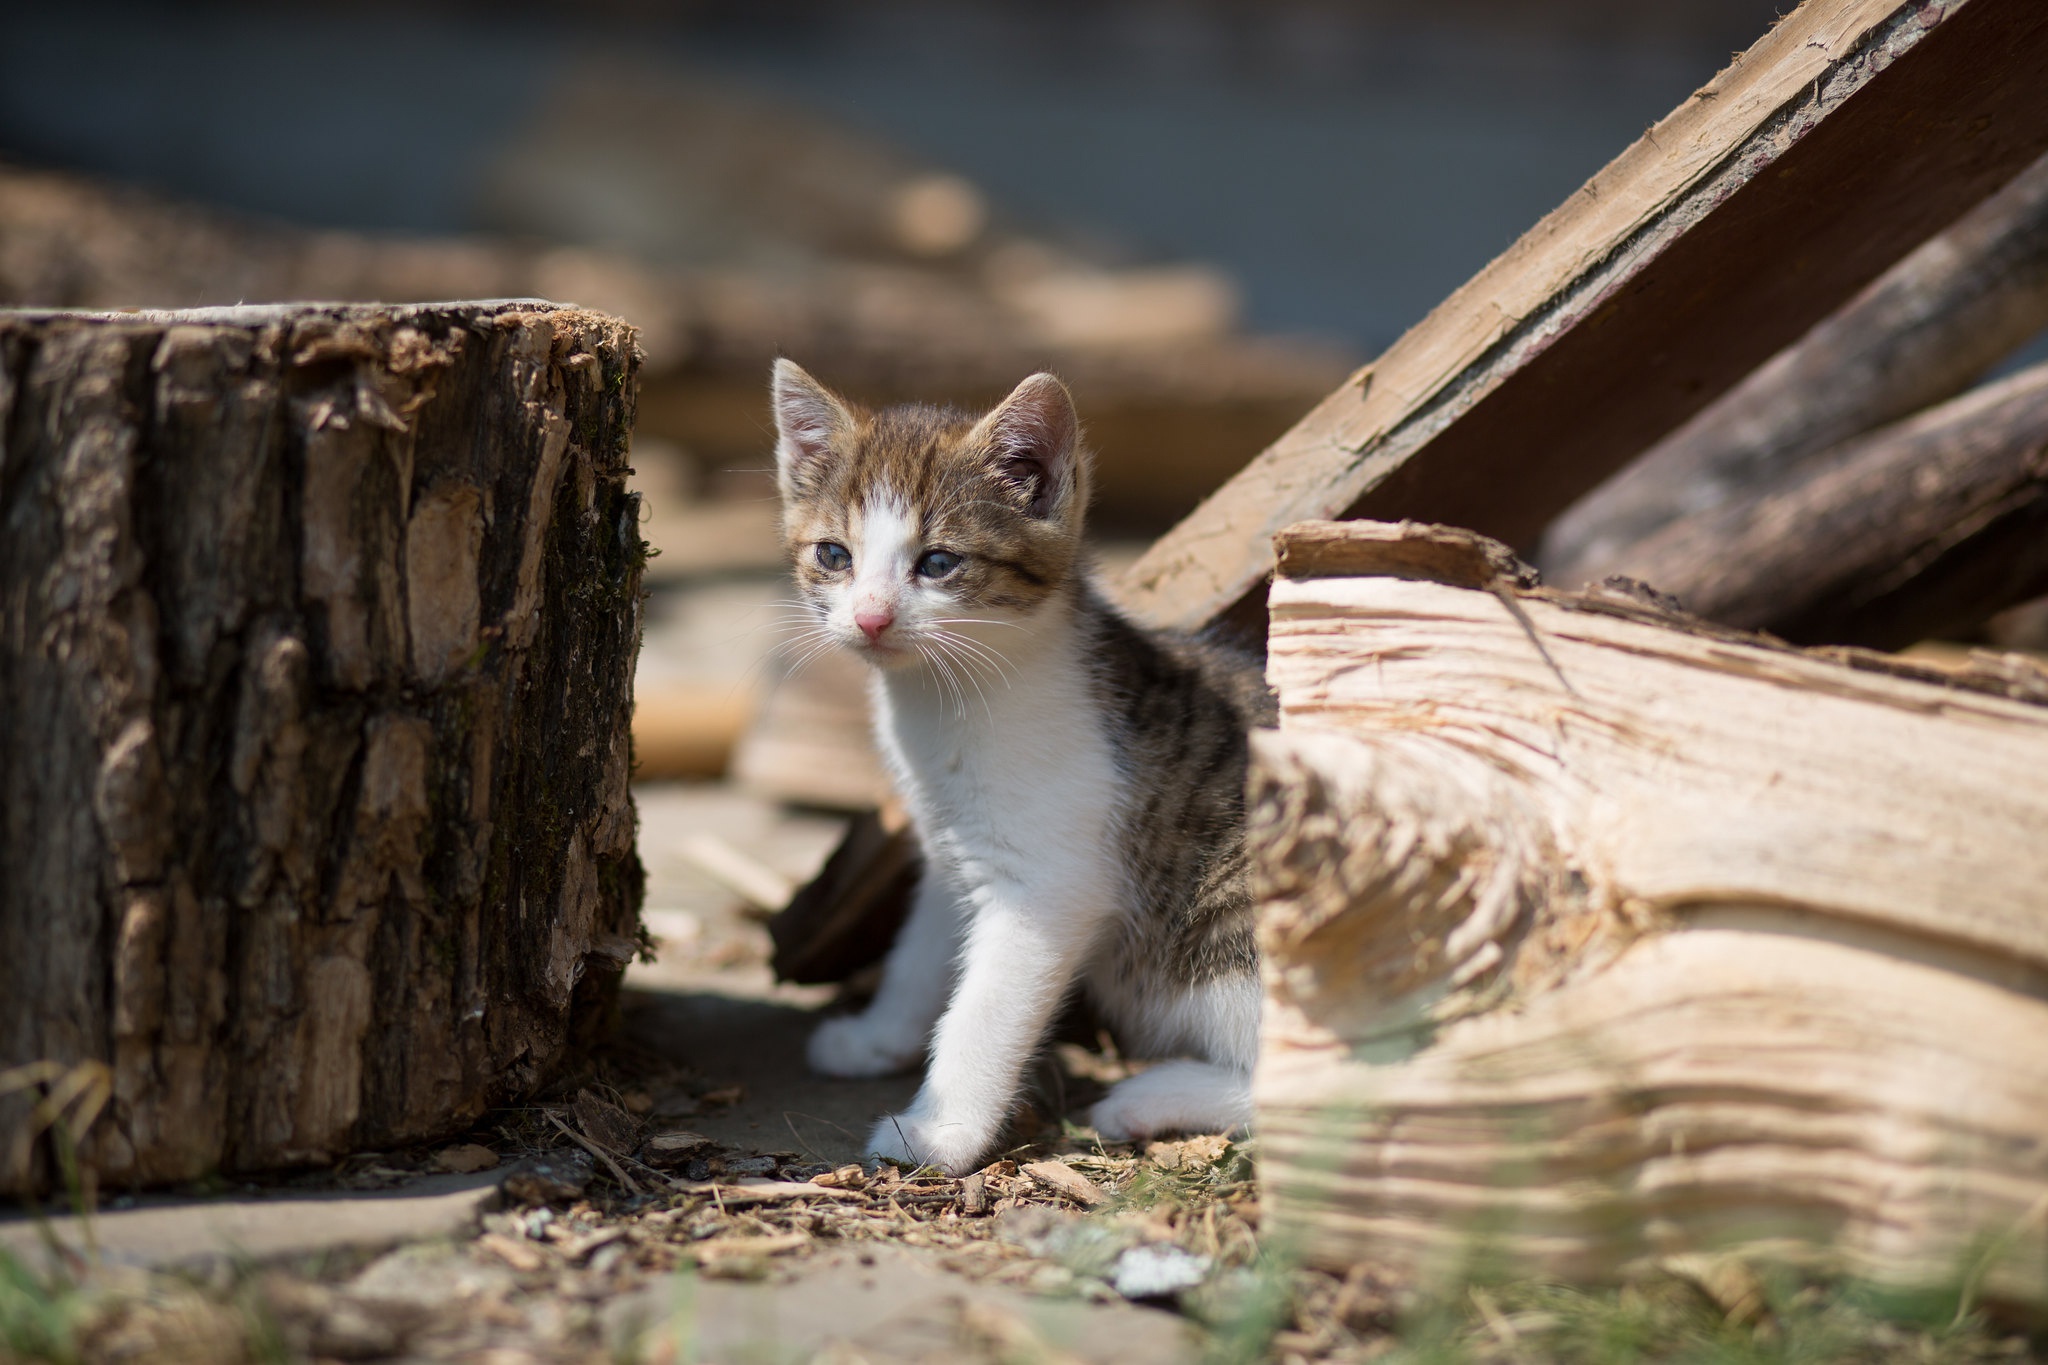 General 2048x1365 cats wood outdoors animals mammals kittens stray cat